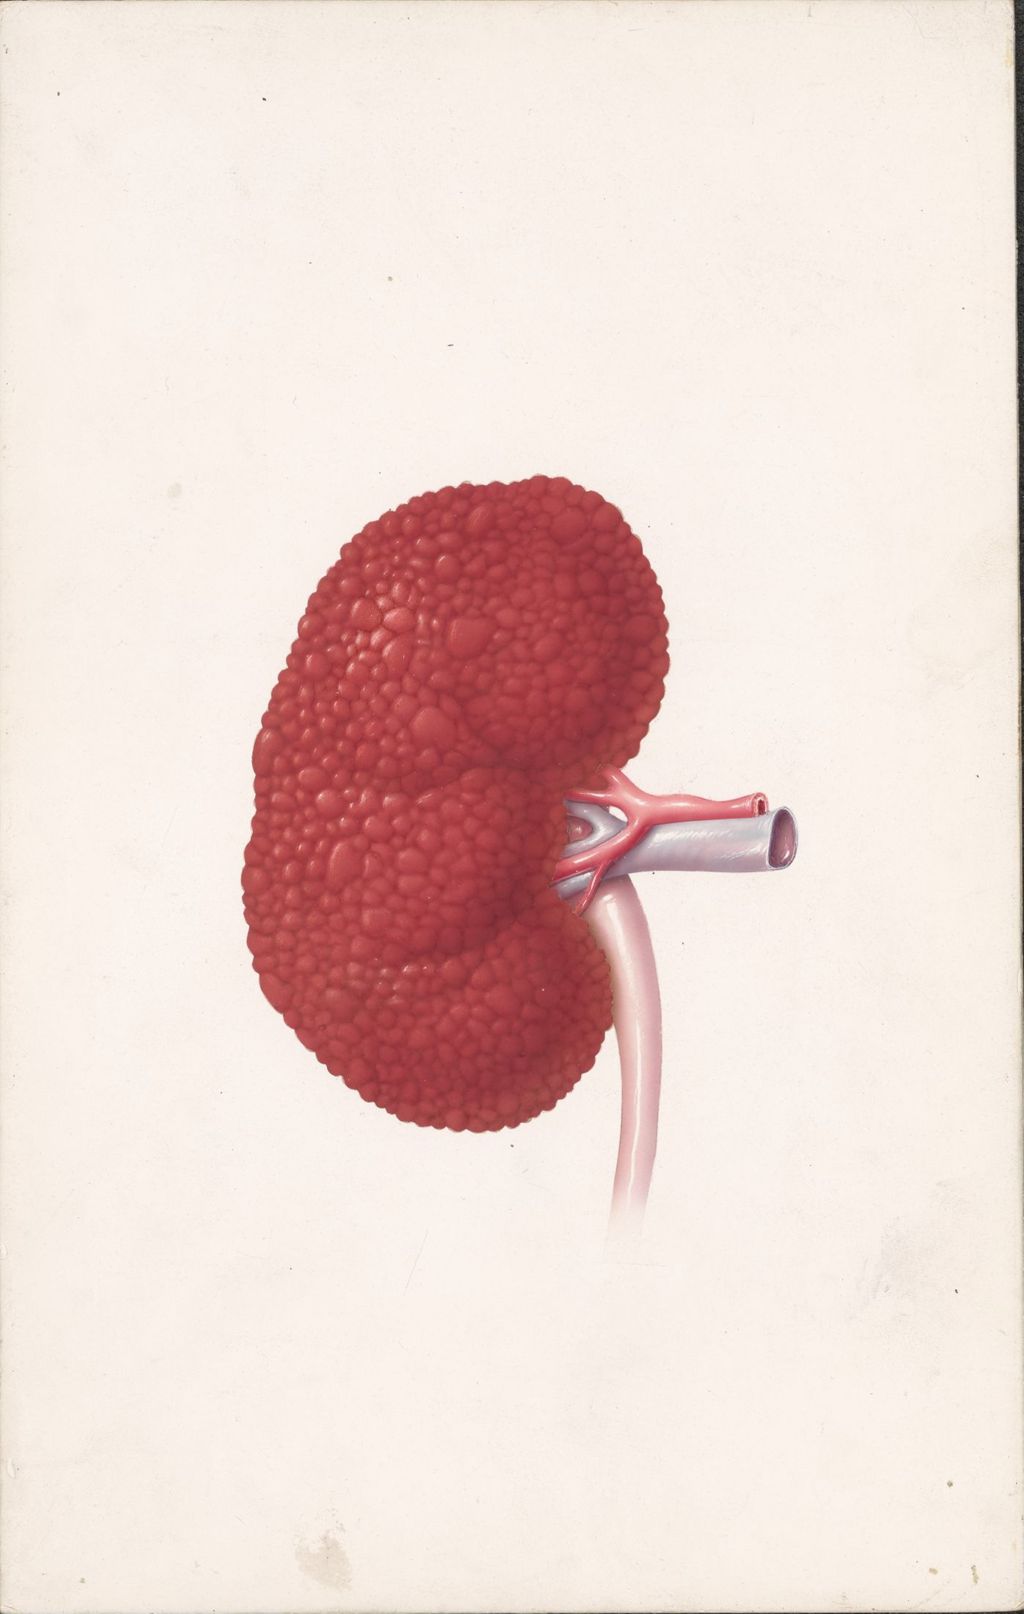 Miniature of Diuril, Journal ad, Nephrosclerosis, Edema of renal origin